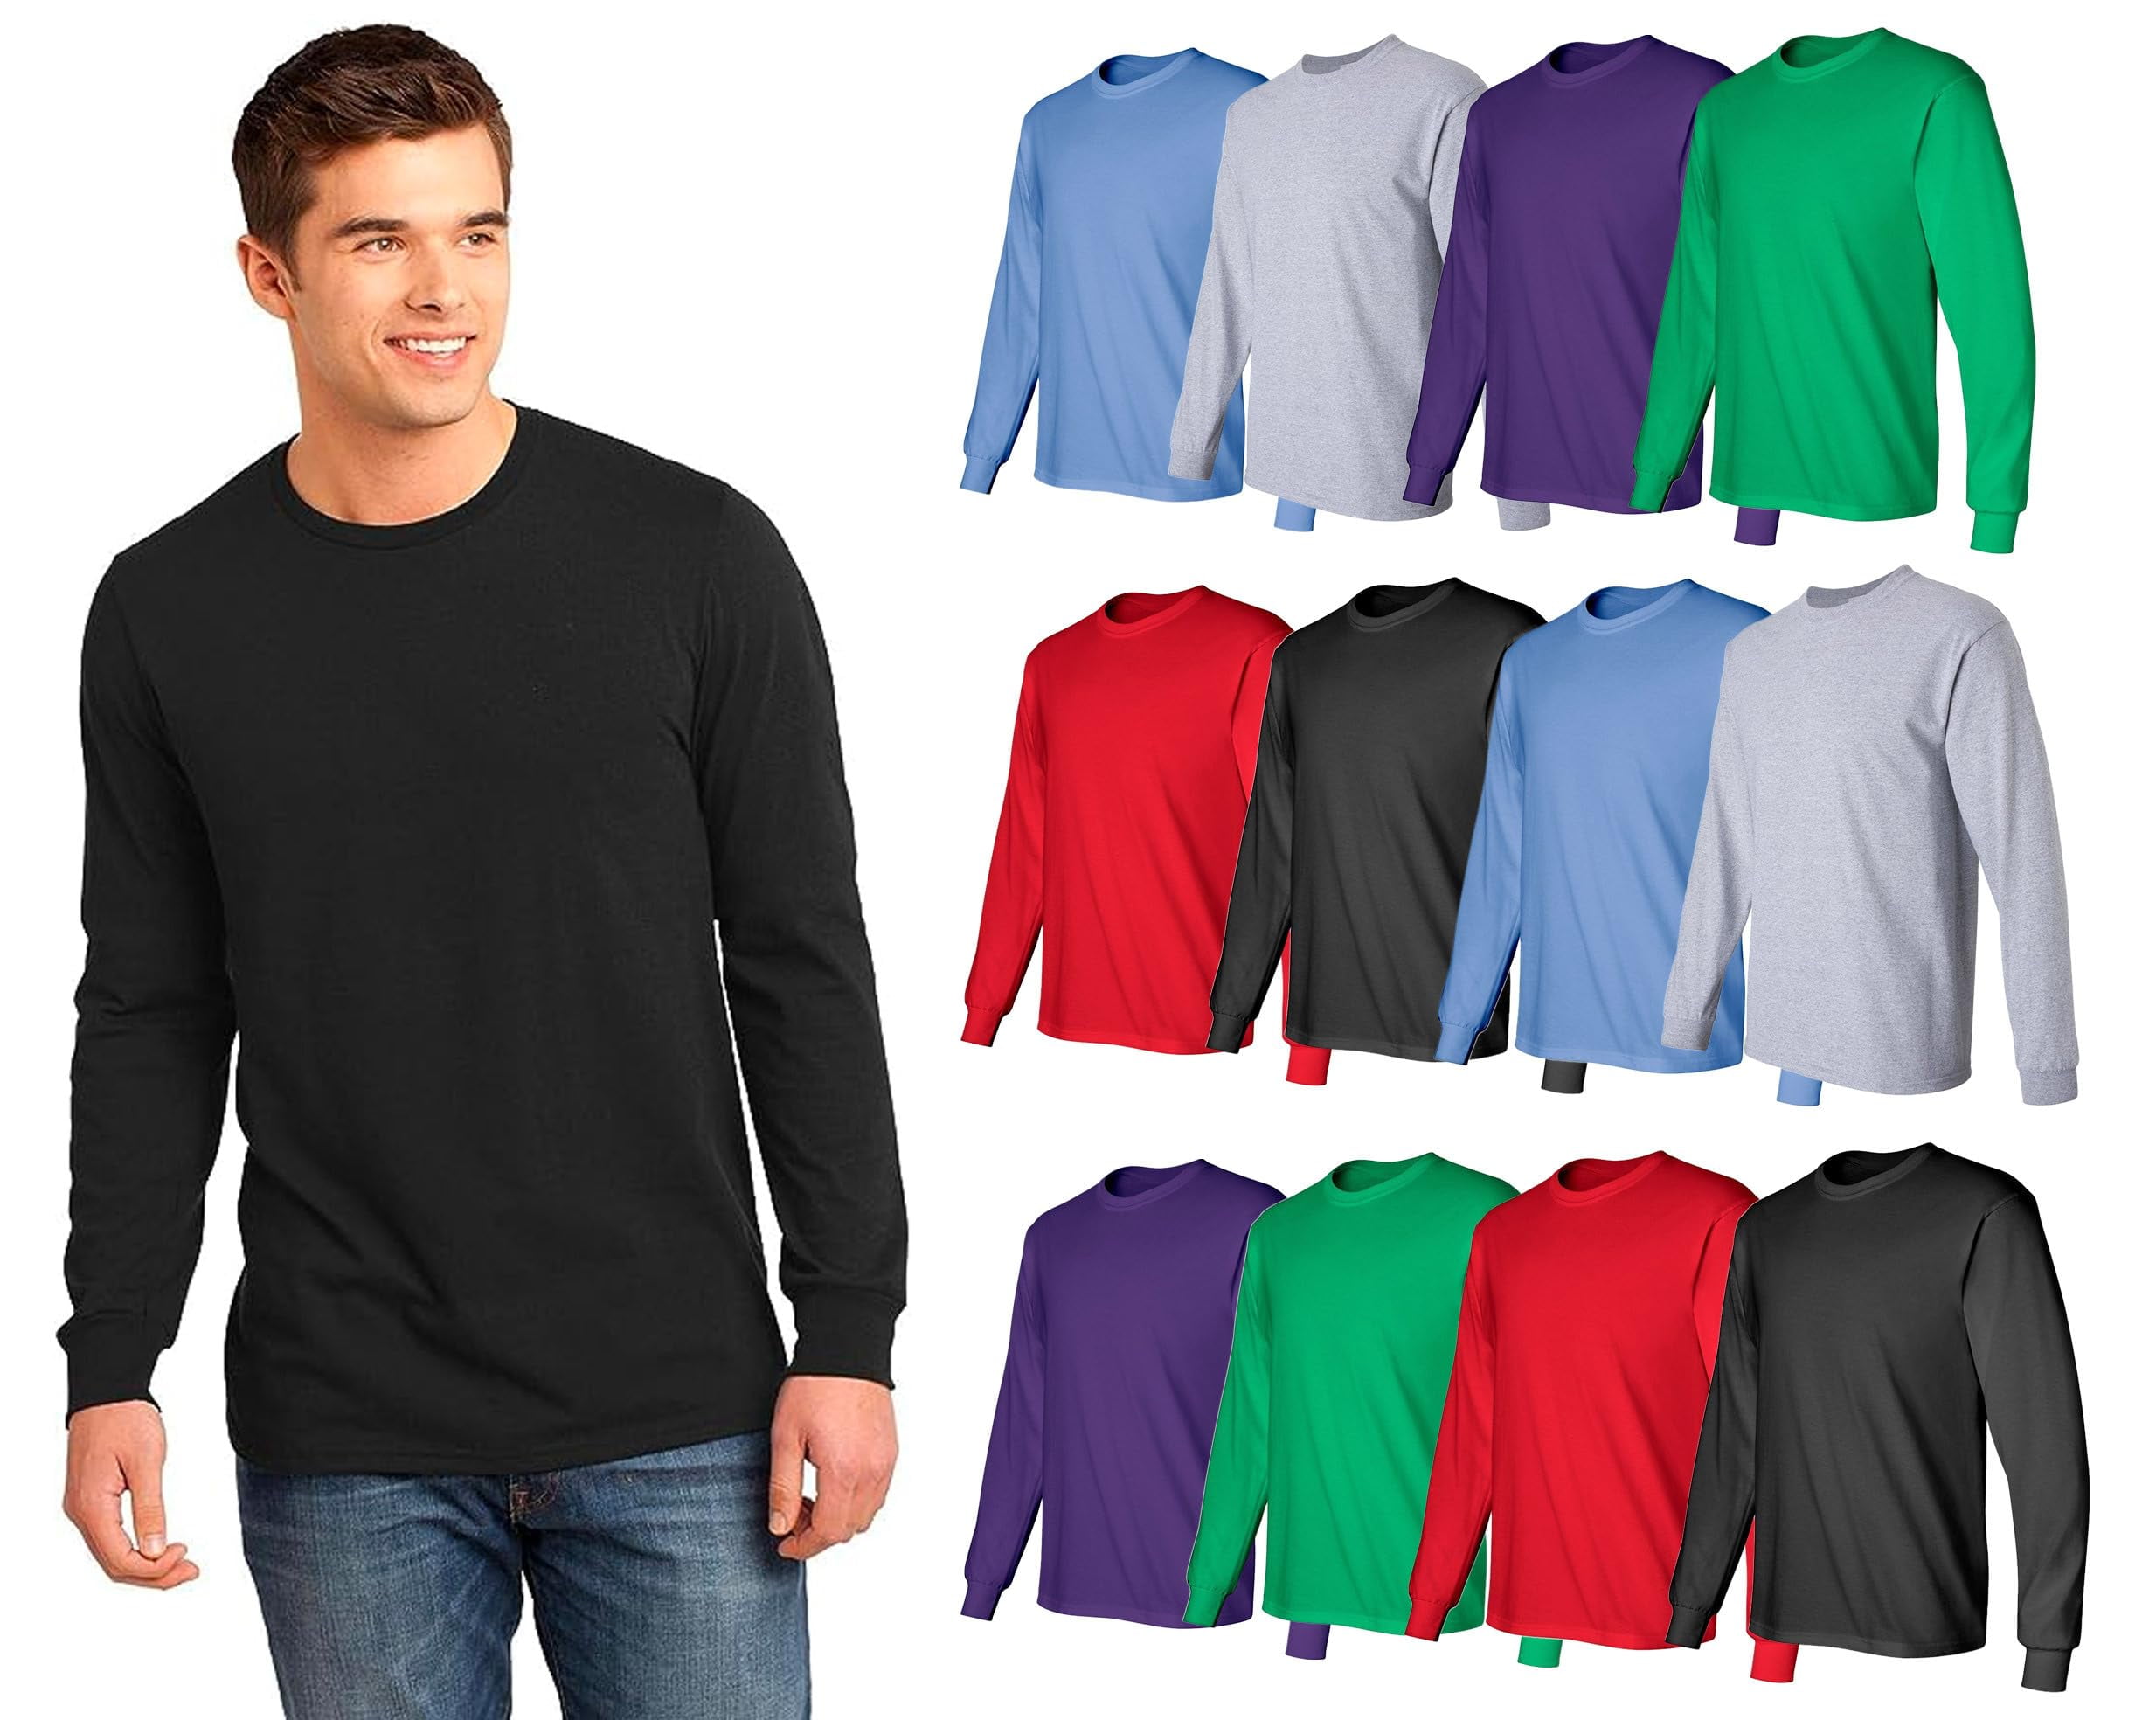 SOCKS'NBULK Mens Colorful T-Shirts, 100% Cotton - Crew Neck Bulk Tees For Men, Wholesale Sleeved Packs (12 Pack Sleeve, Small) - Walmart.com